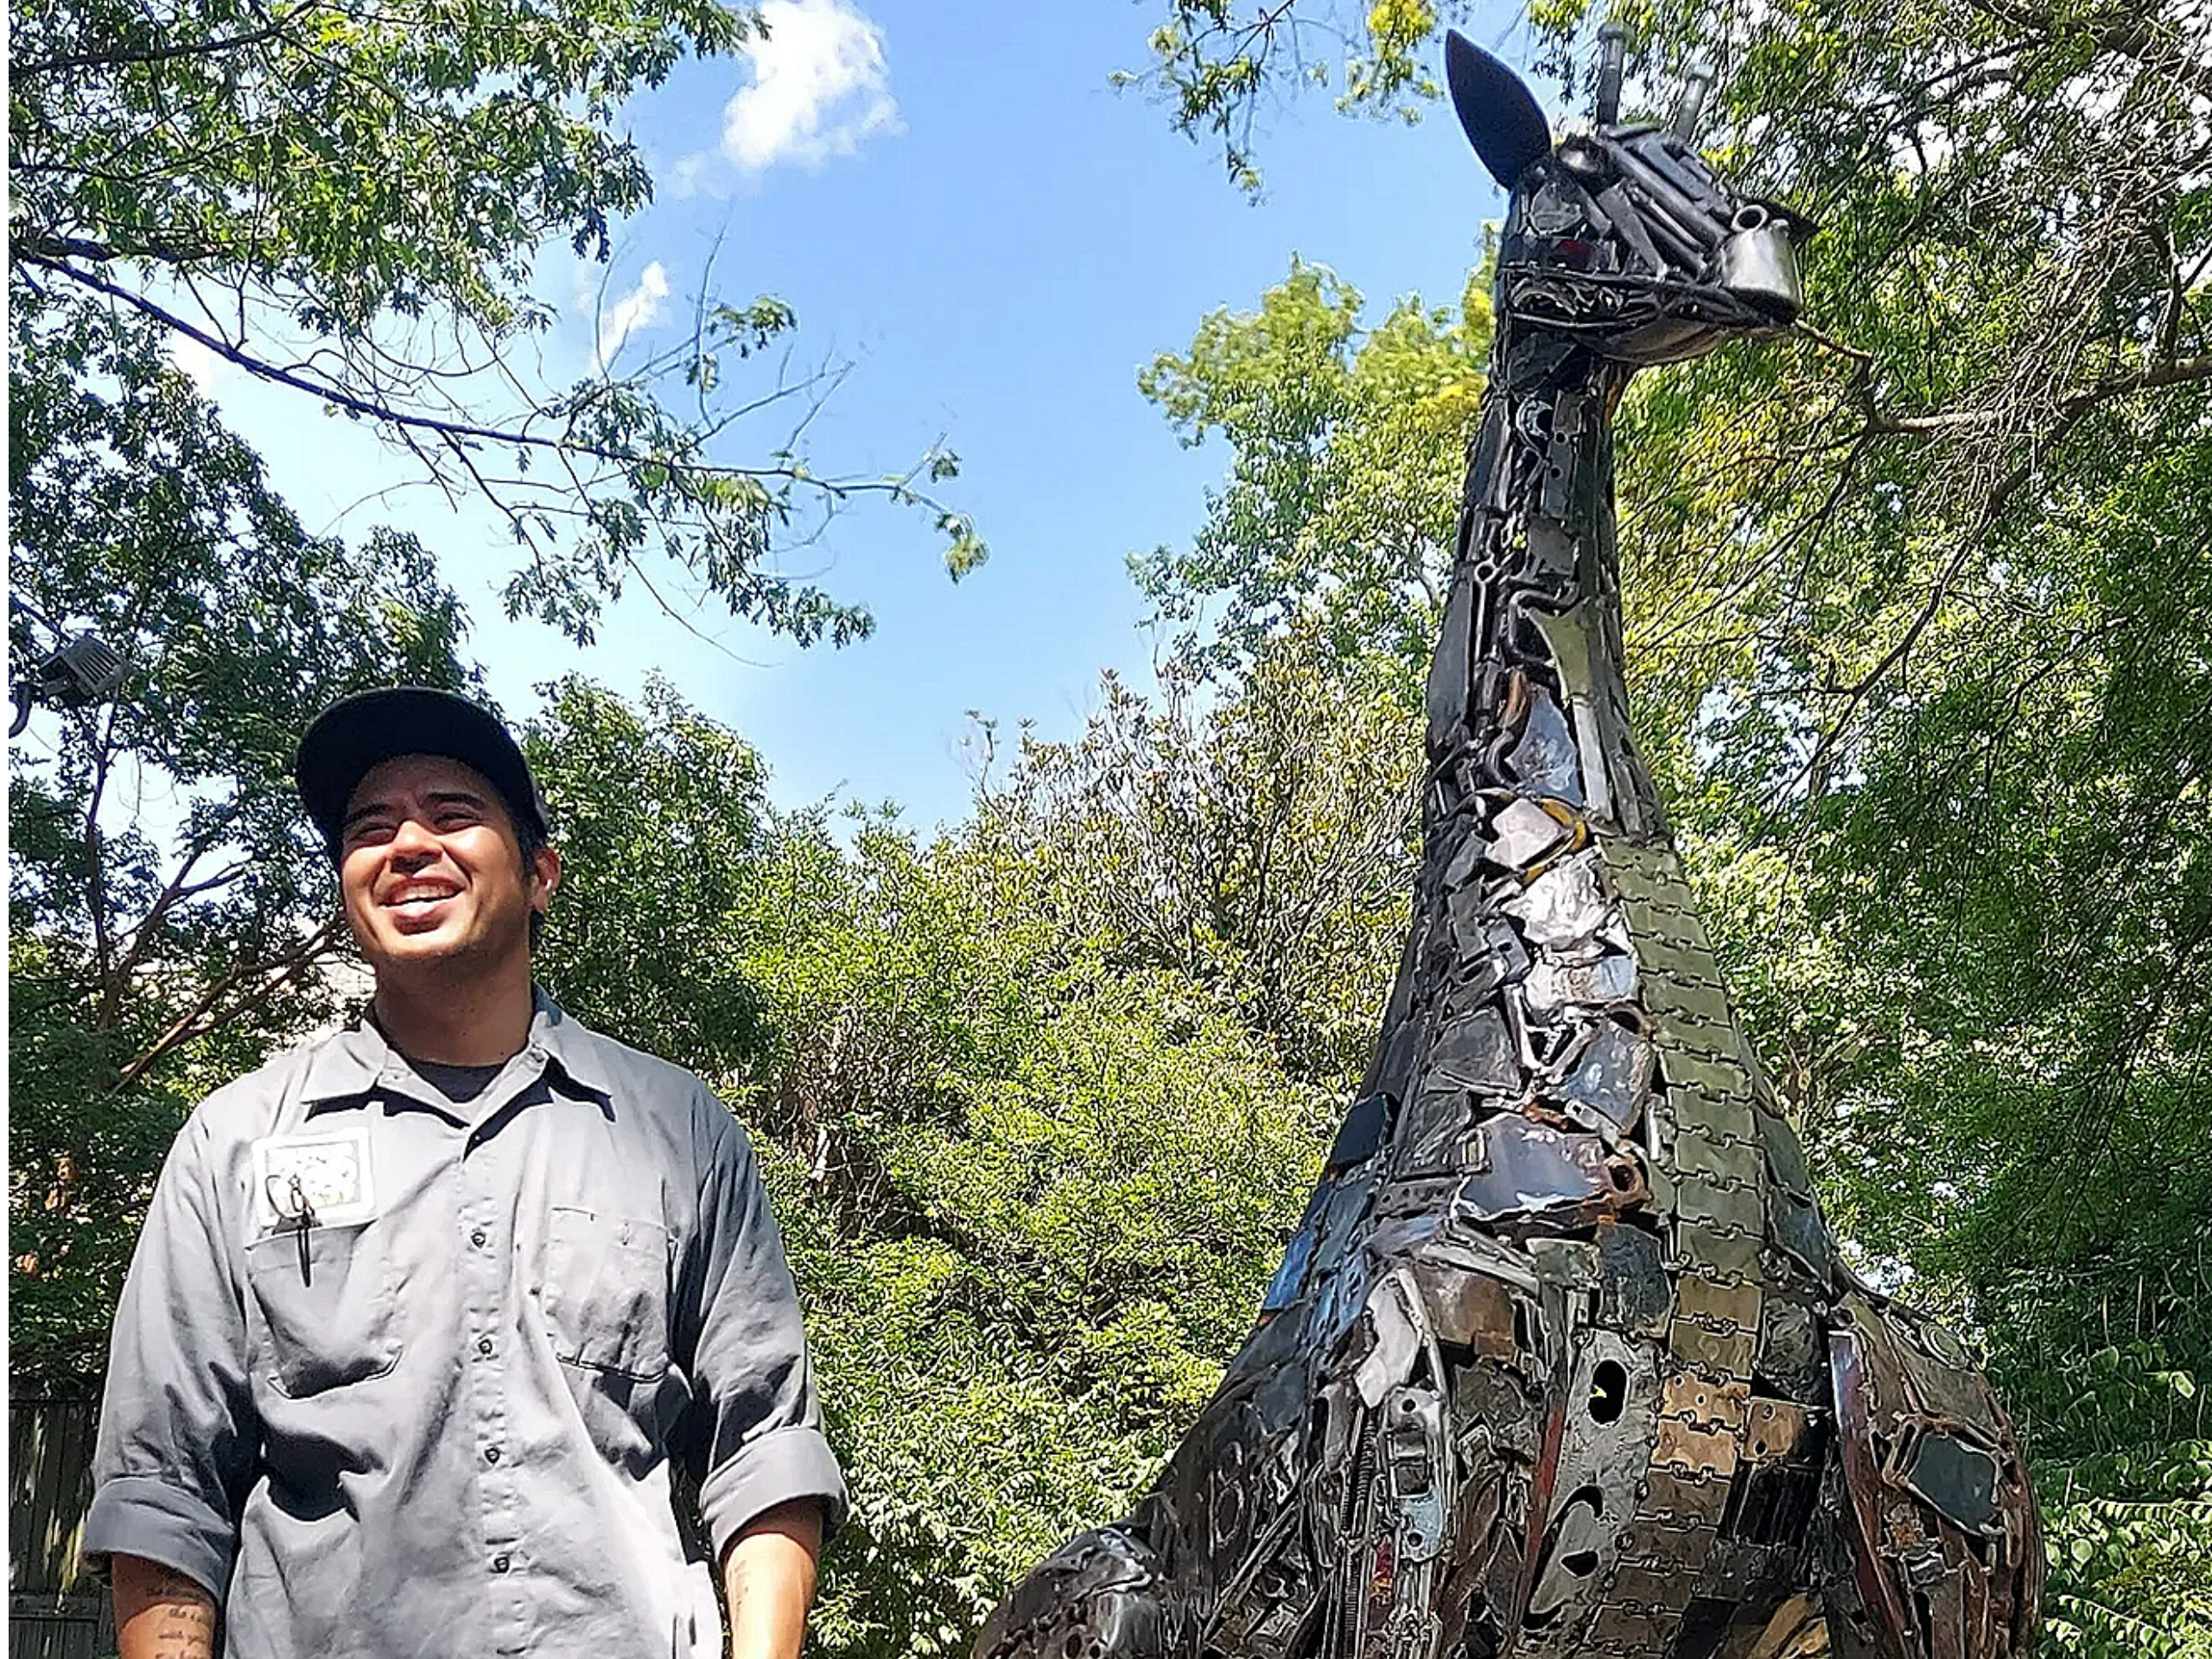 7 feet tall giraffe sculpture installed at the Philadelphia Zoo